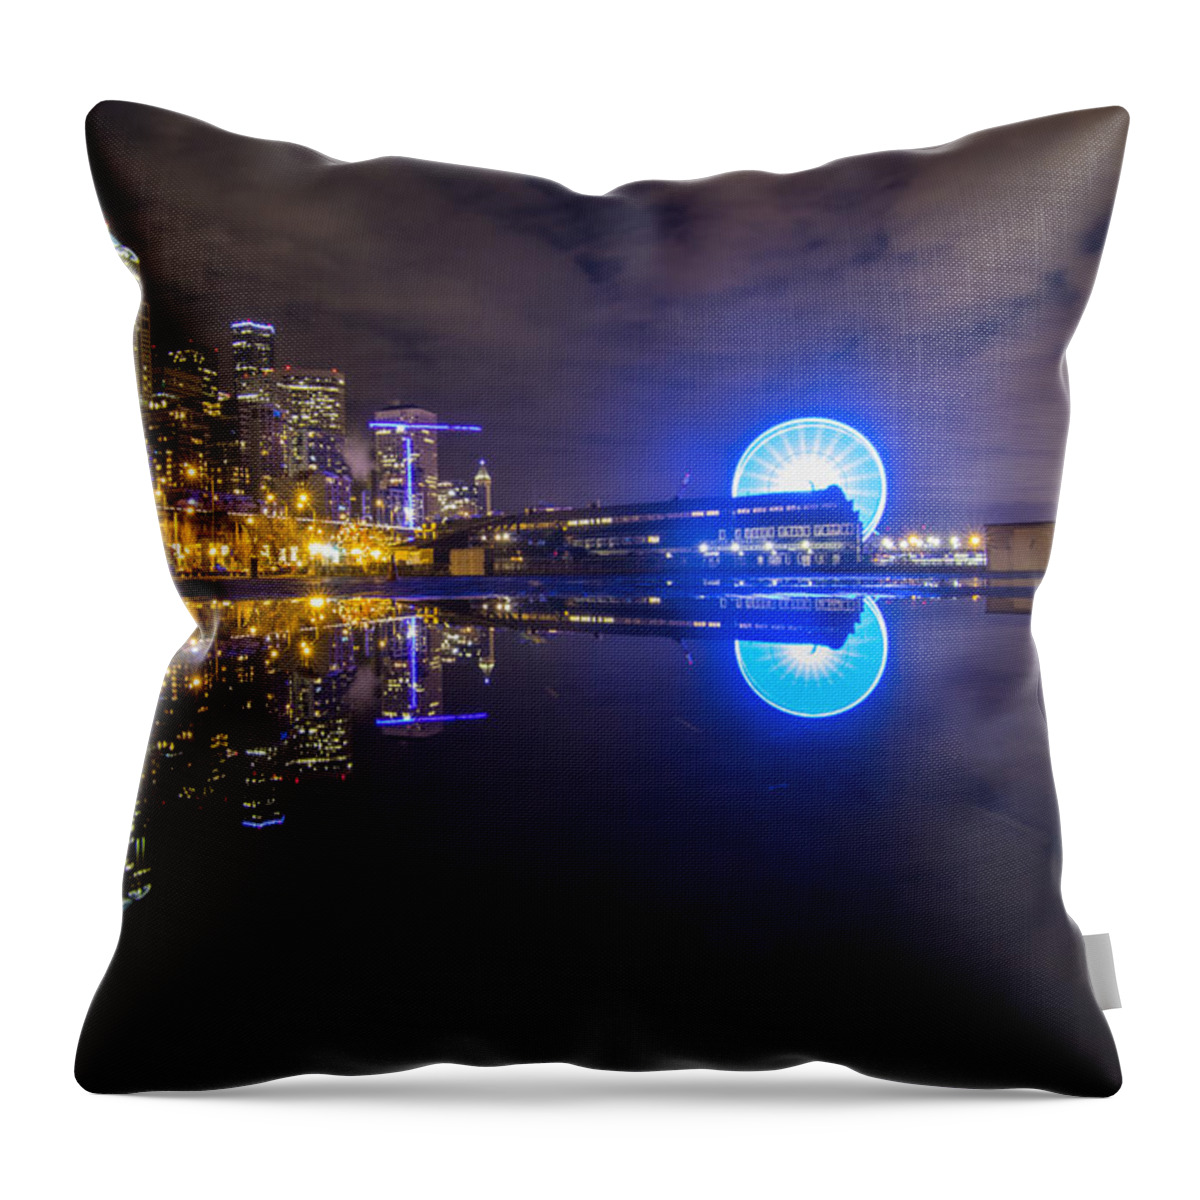 Seattle Throw Pillow featuring the photograph Great Wheel Seattle City Reflection by Matt McDonald